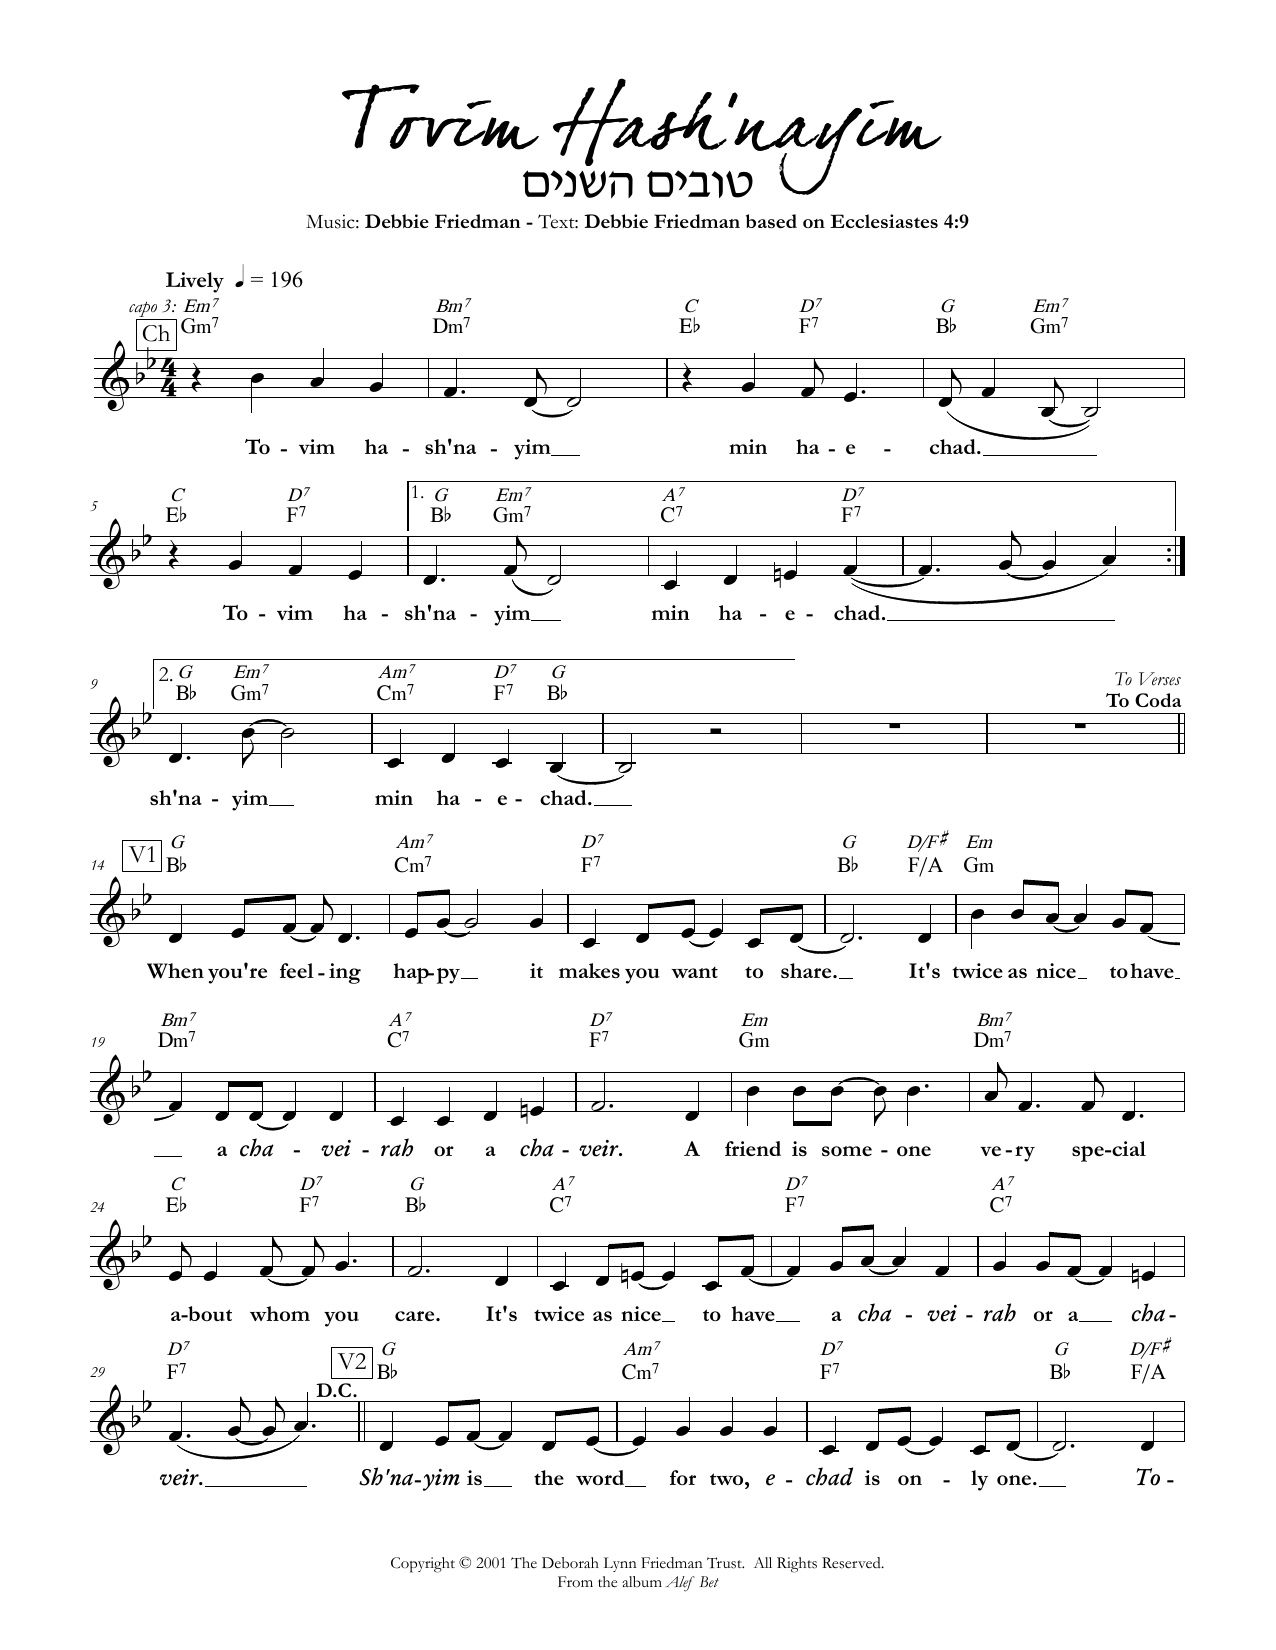 Debbie Friedman Tovim Hash'nayim Sheet Music Notes & Chords for Lead Sheet / Fake Book - Download or Print PDF